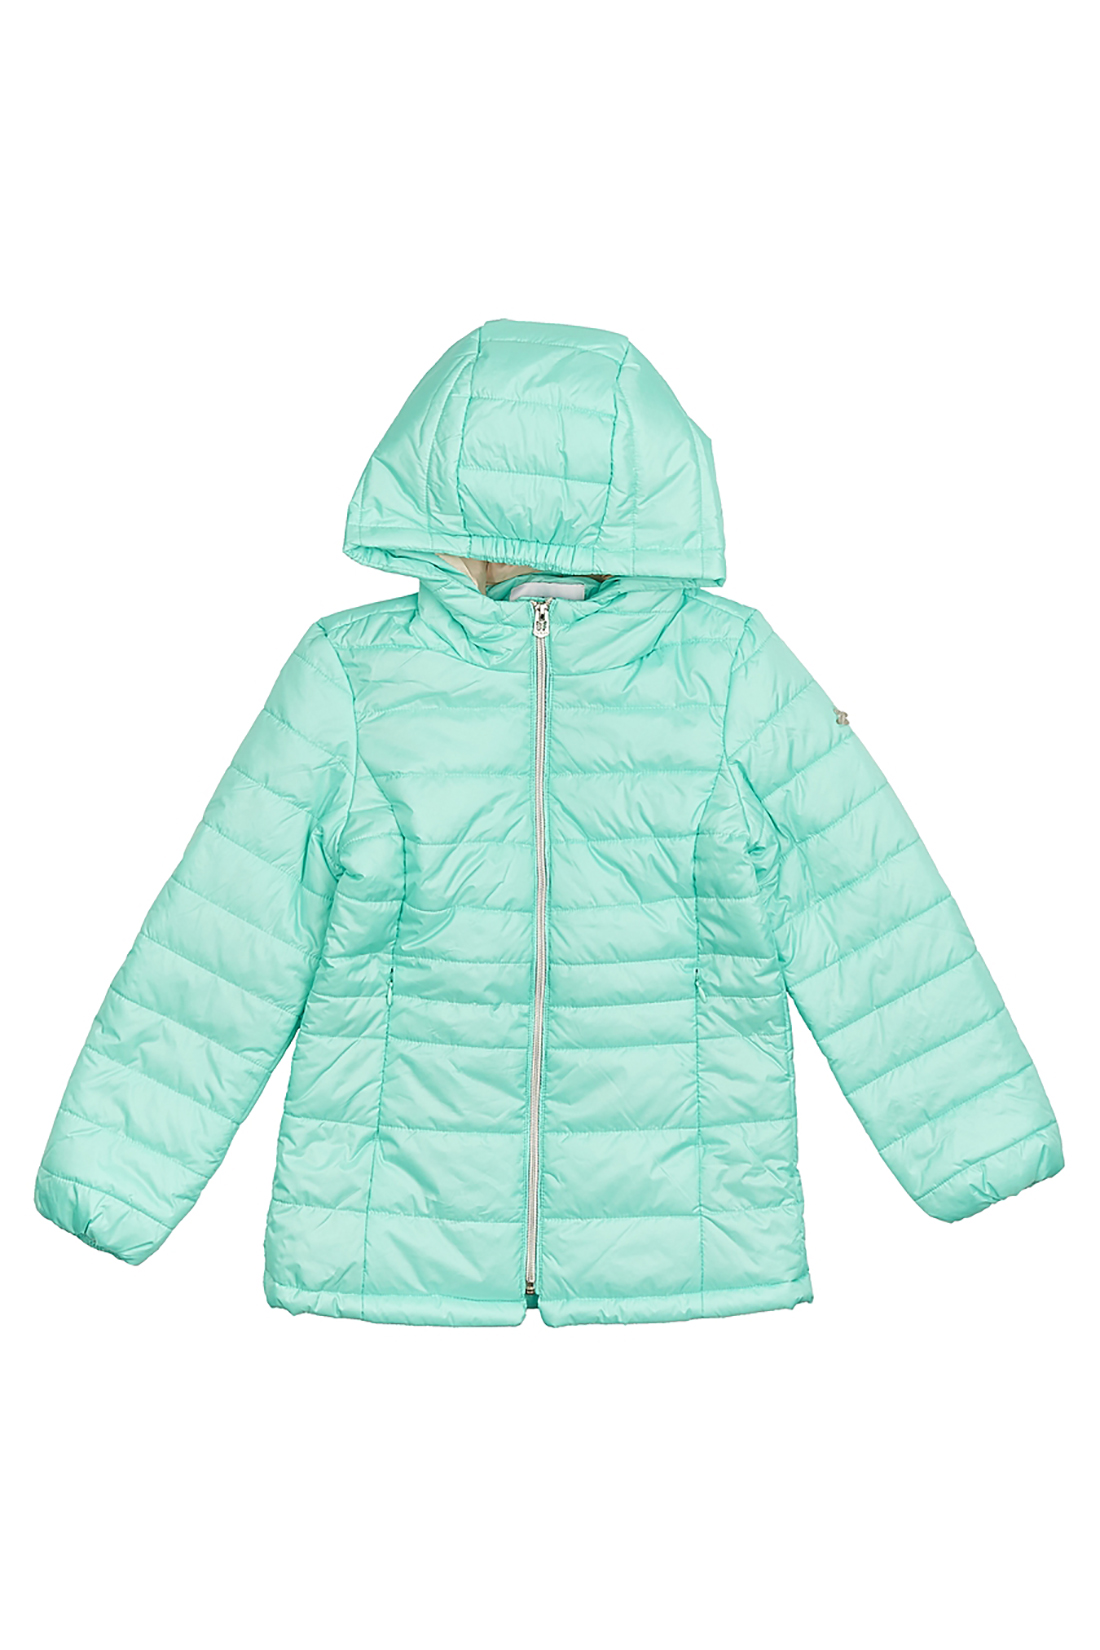 Куртка для девочки (арт. baon BJ038001), размер 158, цвет зеленый Куртка для девочки (арт. baon BJ038001) - фото 5